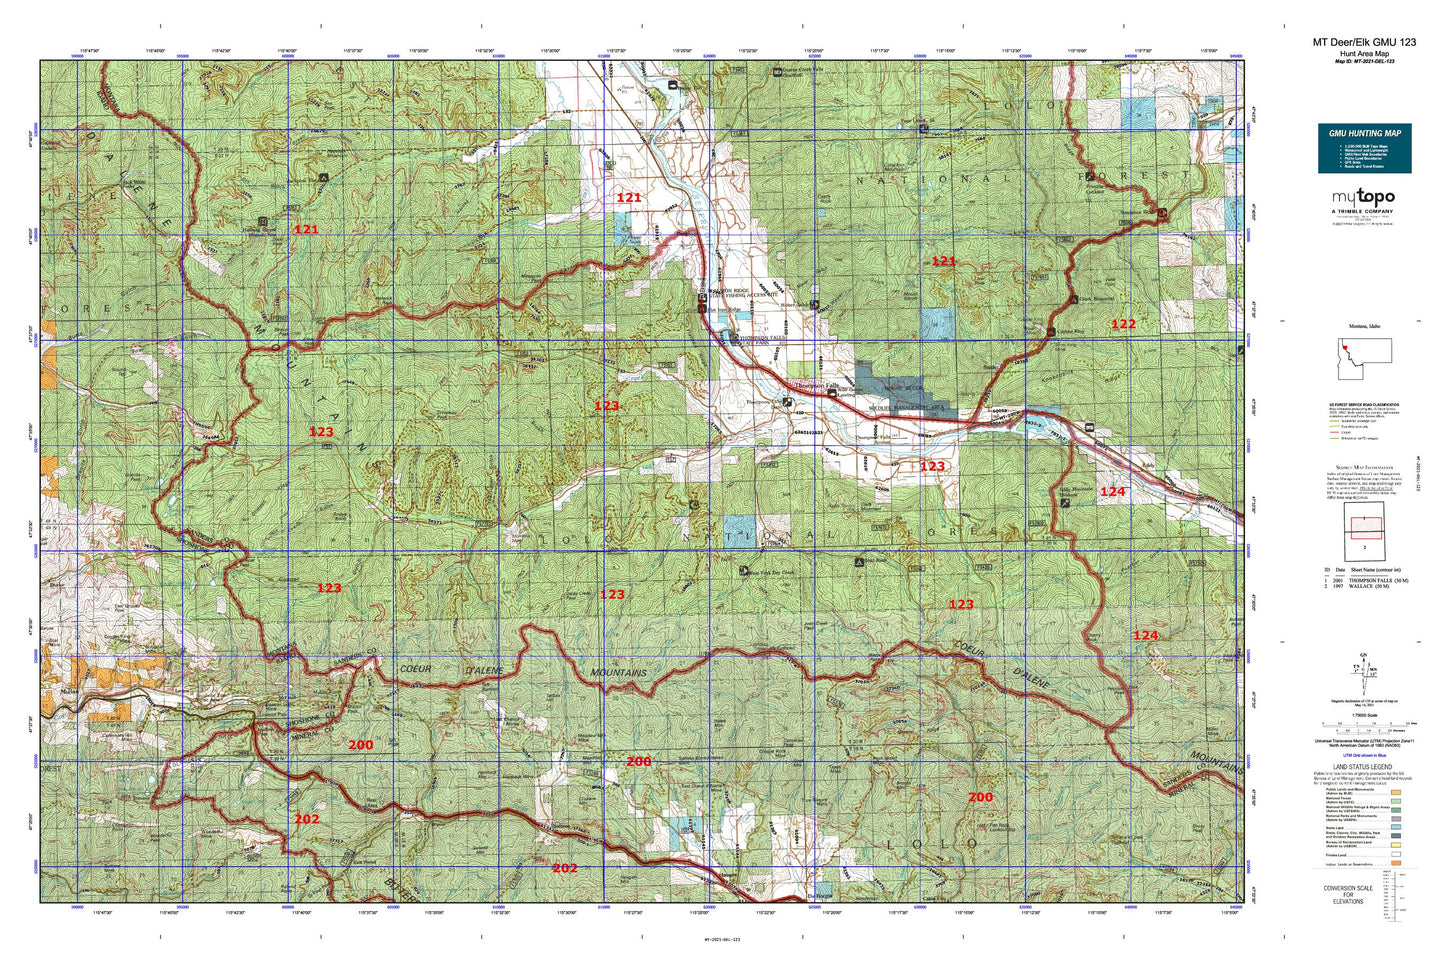 Montana Deer/Elk GMU 123 Map Image